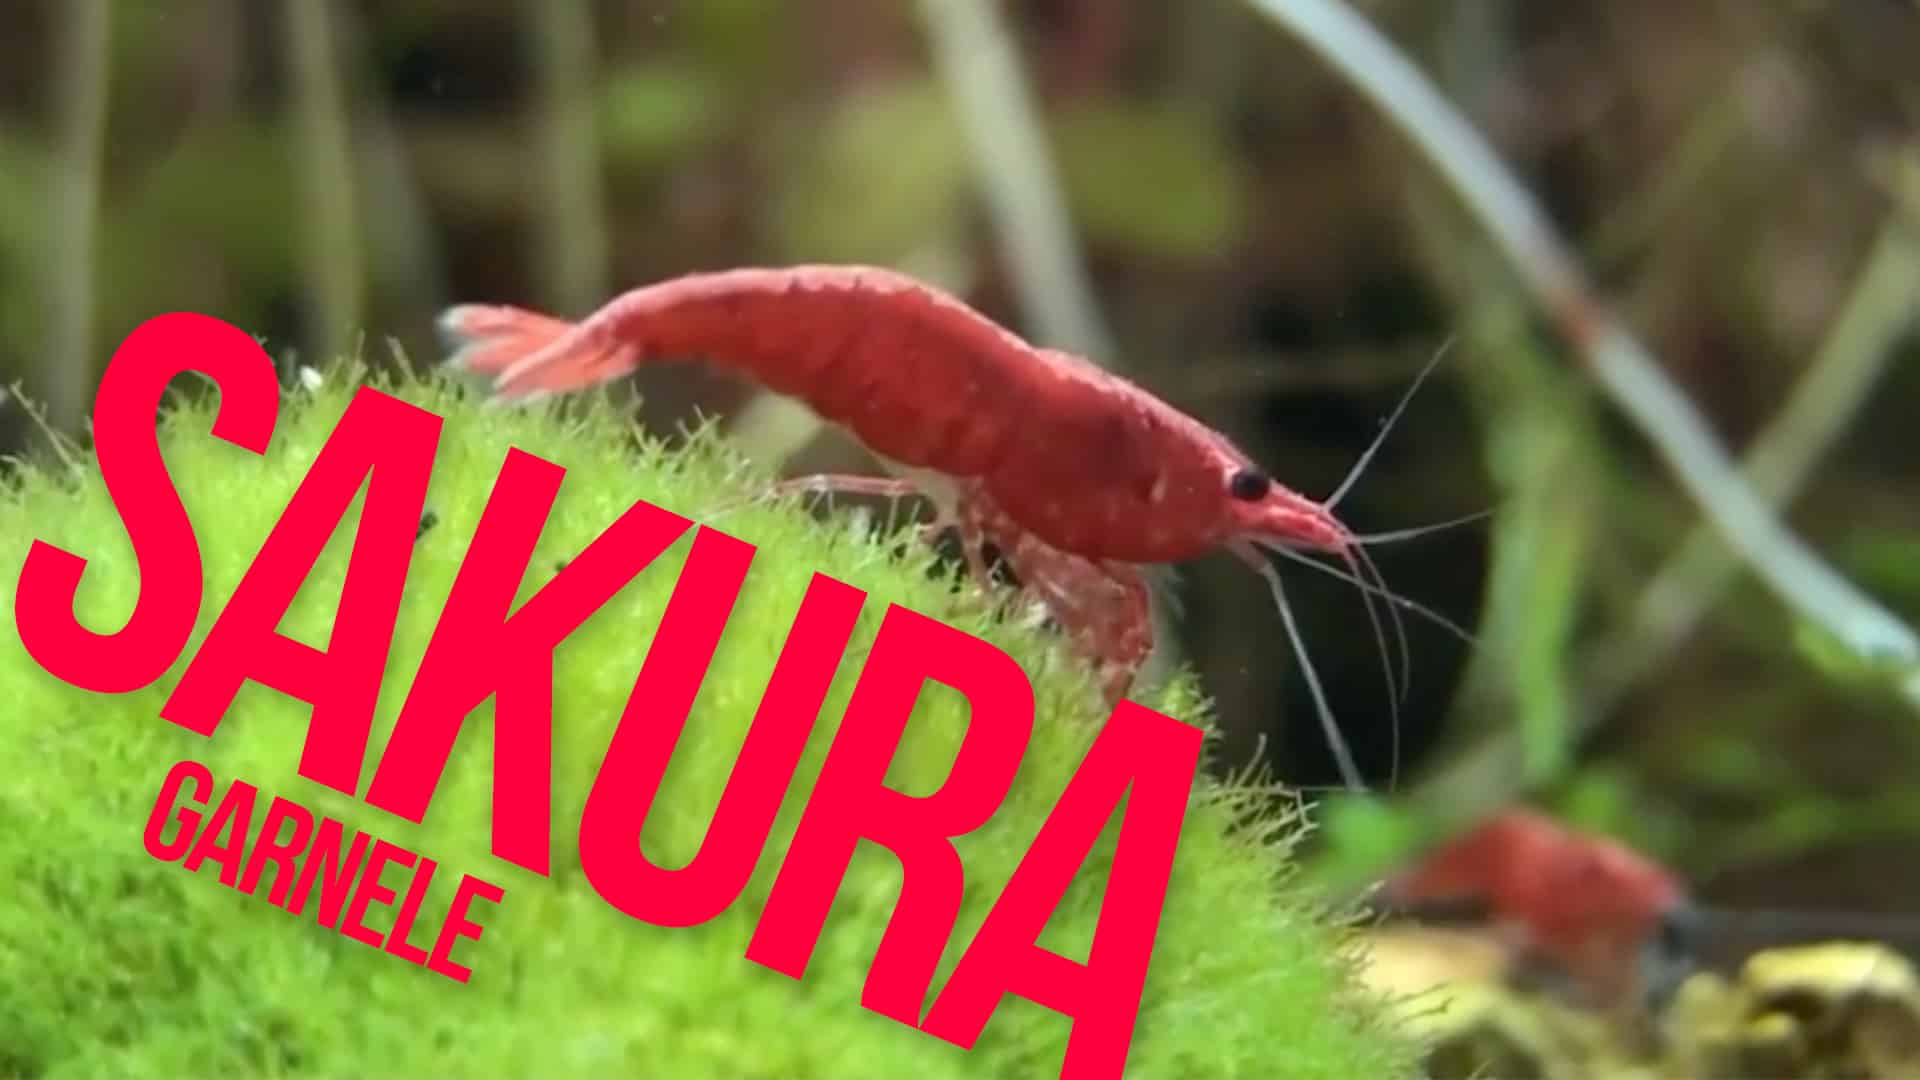 Red Fire Sakura Garnele - Video Portrait